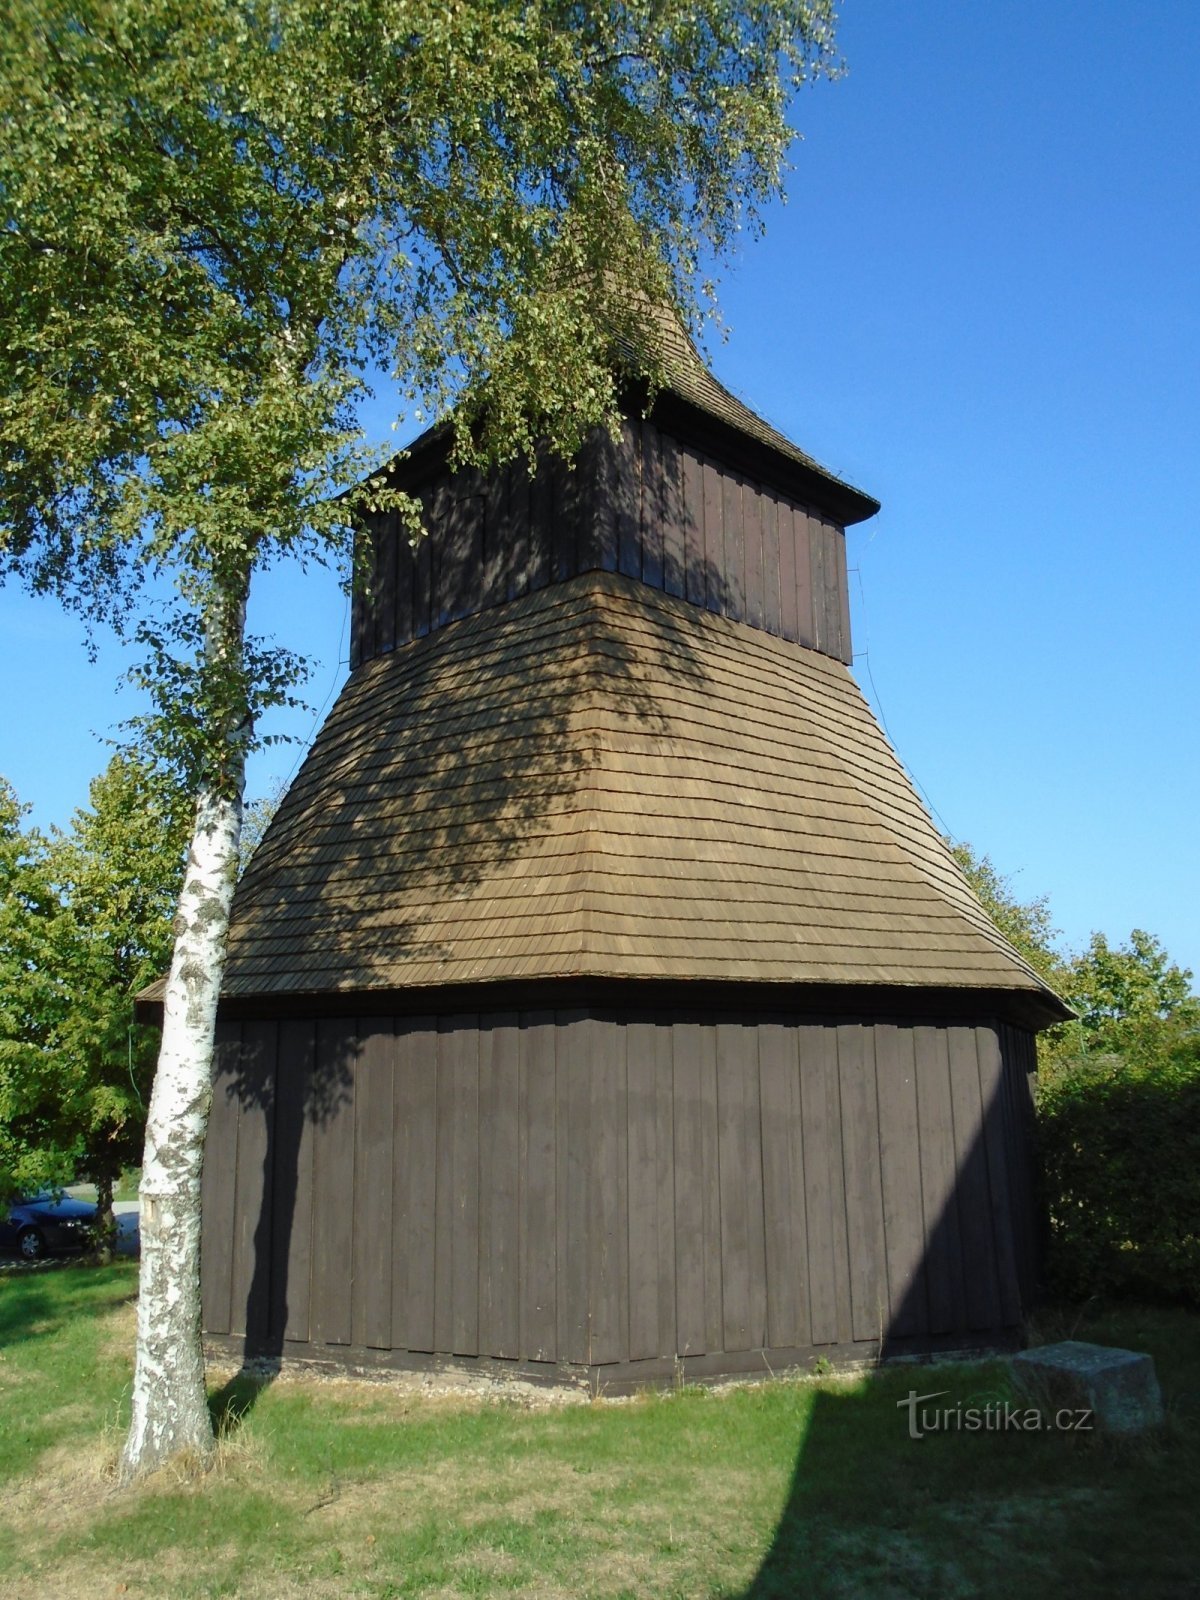 Bell tower at the church of St. Wenceslas and St. Stanislava (Měník)